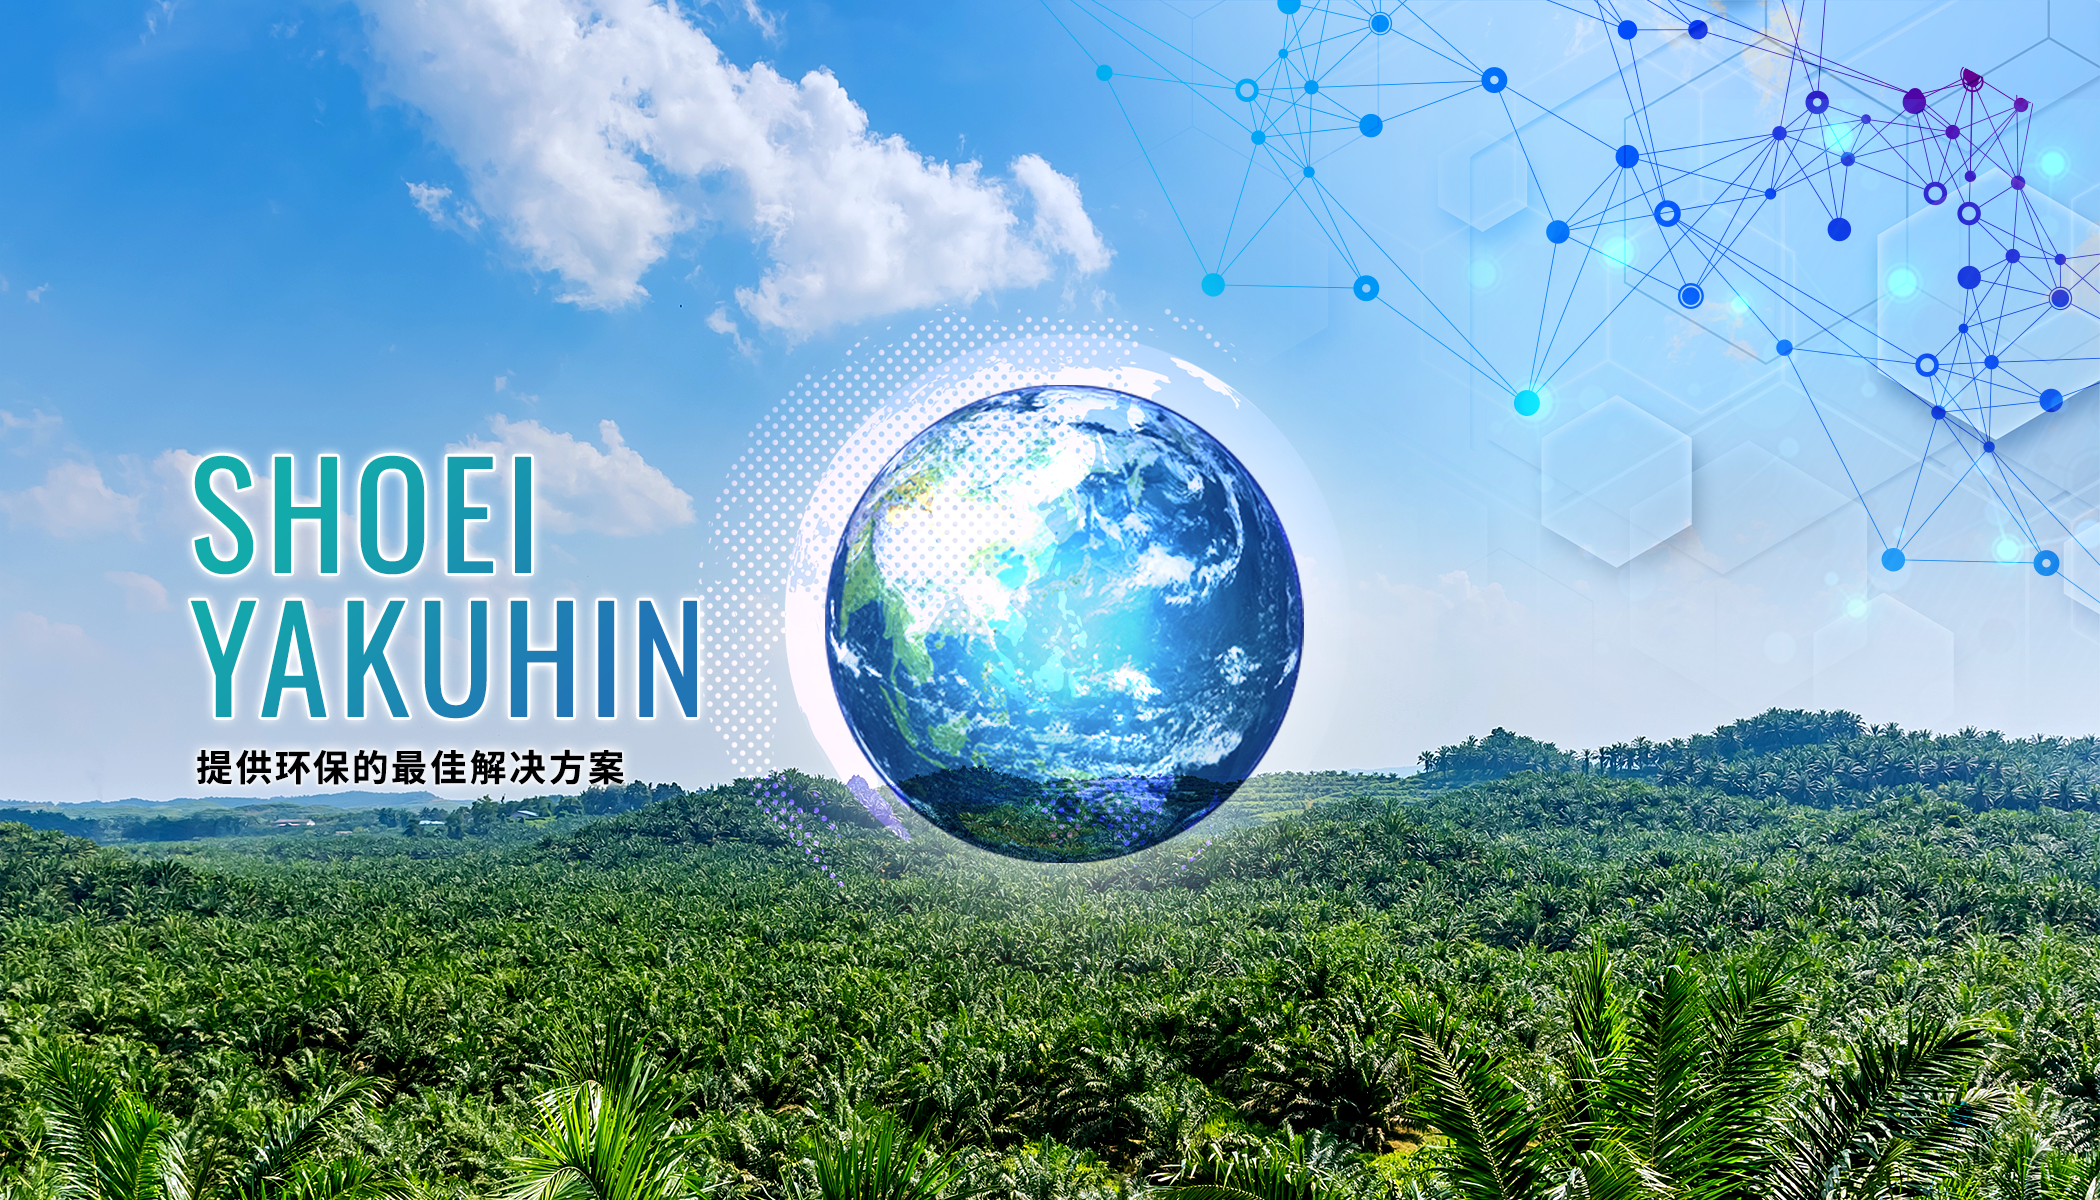 SHOEI YAKUHIN 提供环保的最佳解决方案